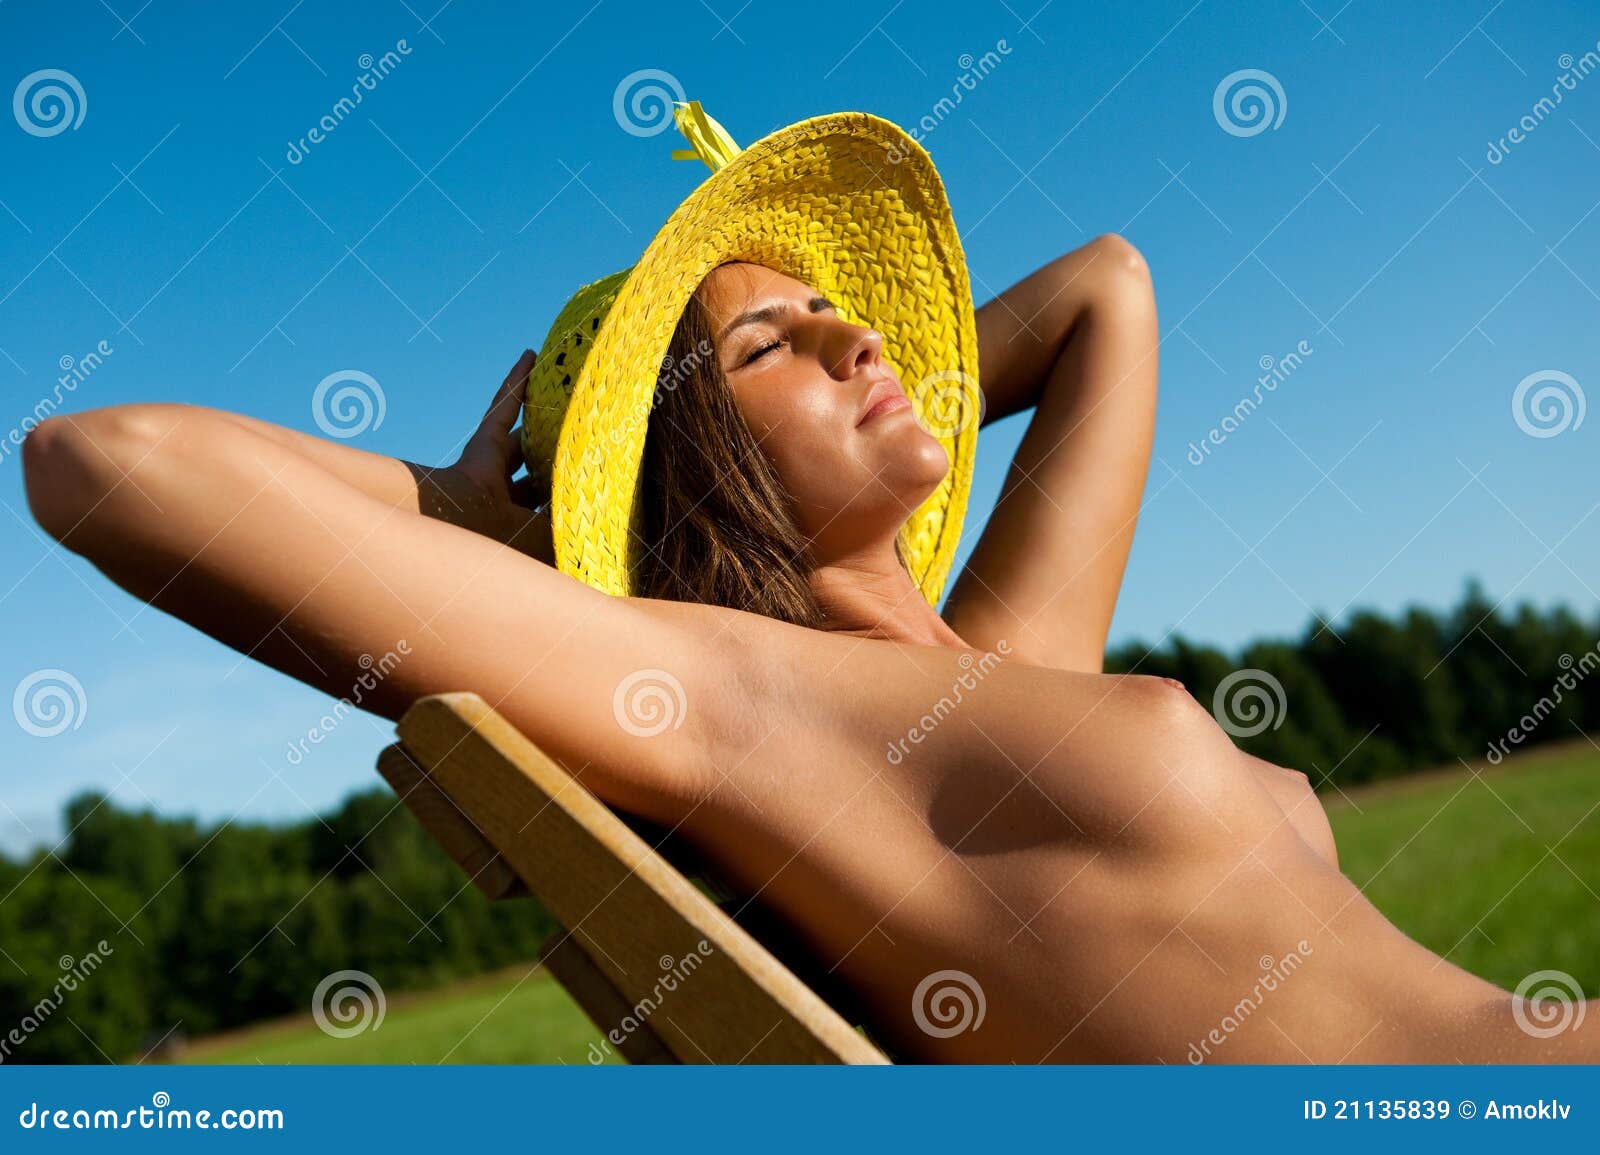 Naked women sunbathing